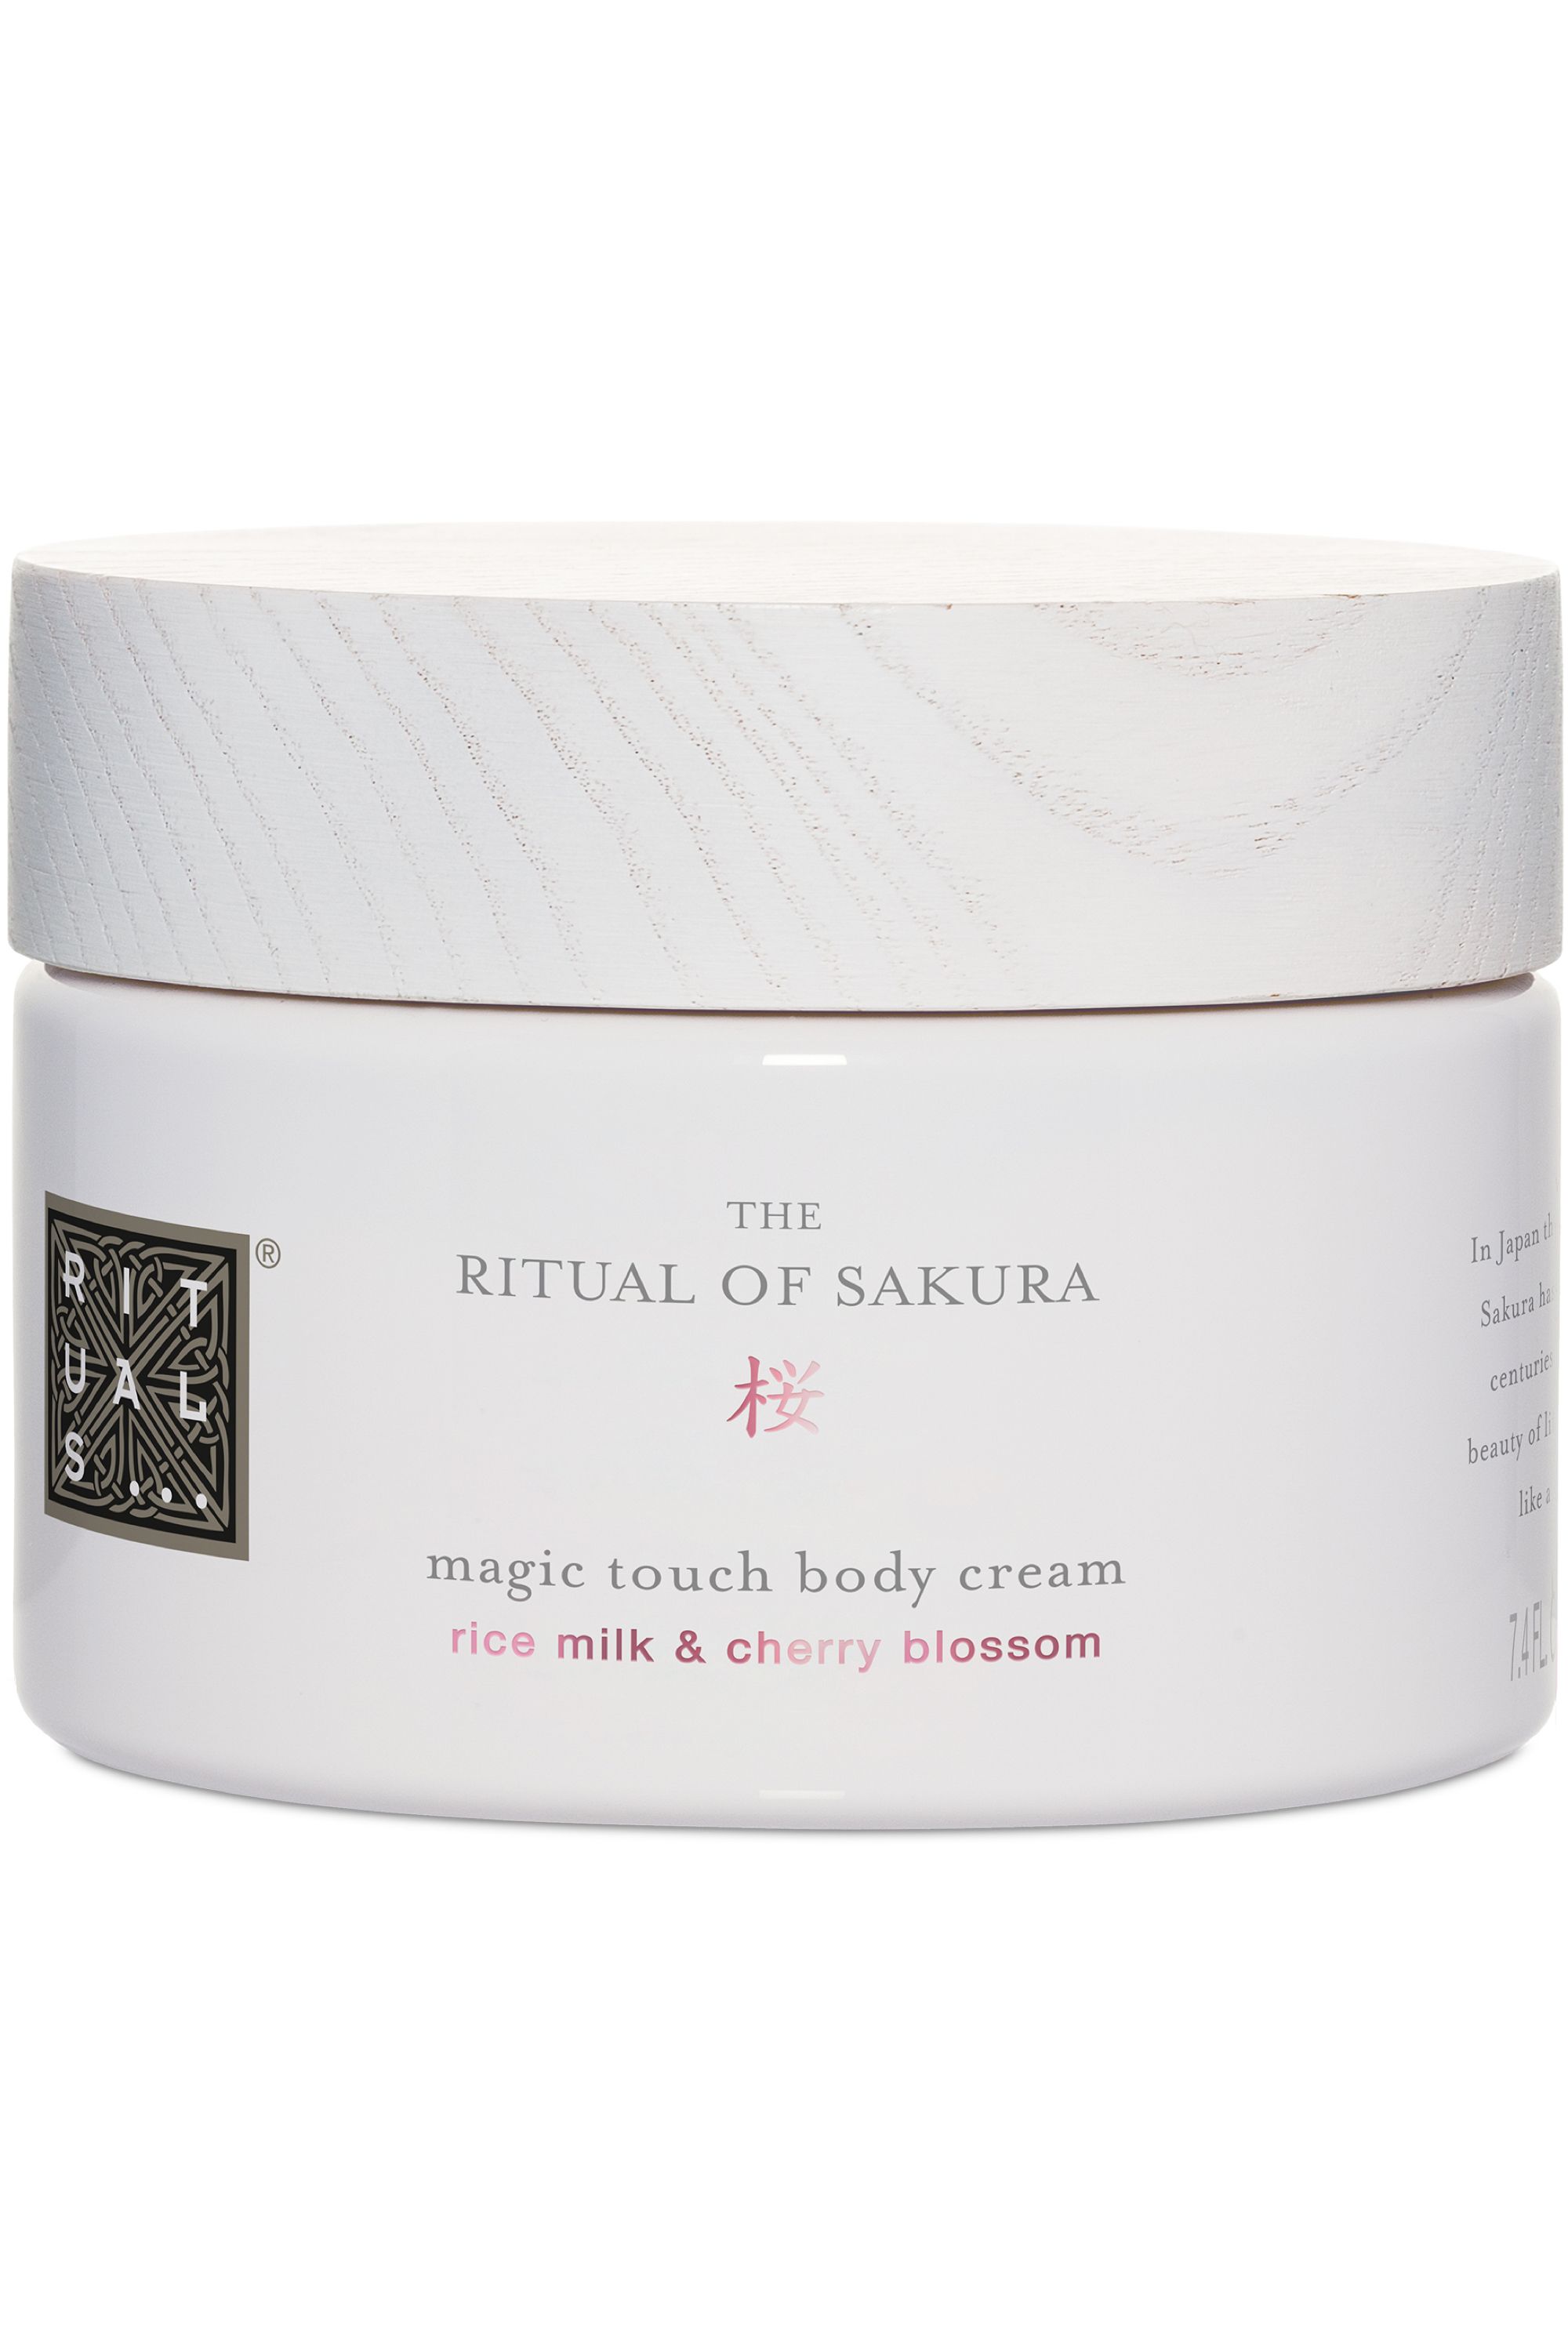 Rituals - Crème pour le corps rechargeable The Ritual of Sakura - Blissim